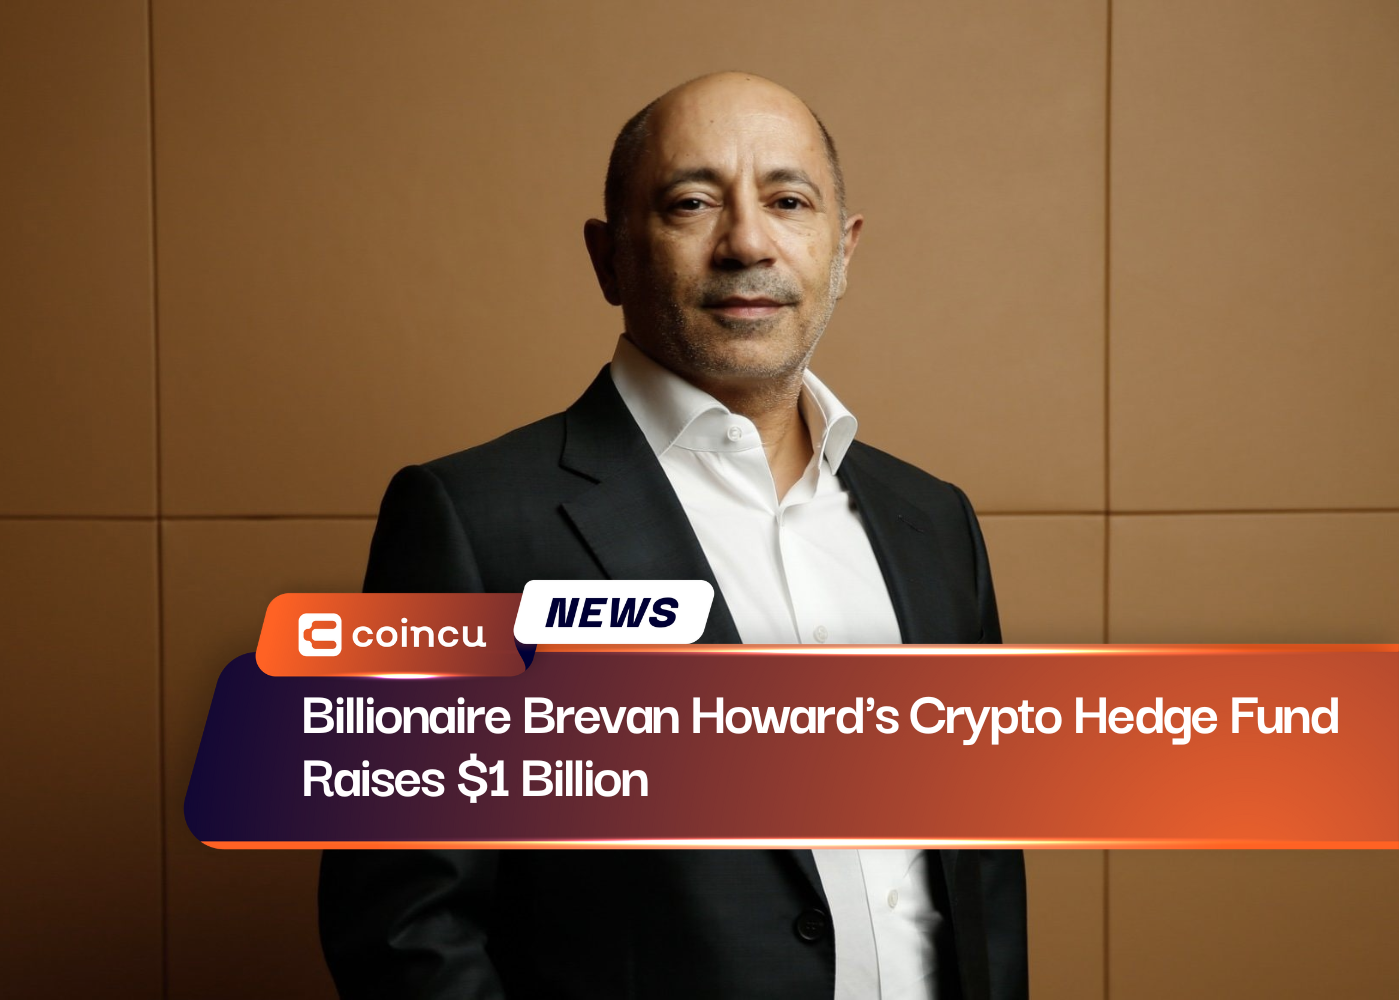 Billionaire Brevan Howard's Crypto Hedge Fund Raises $1 Billion